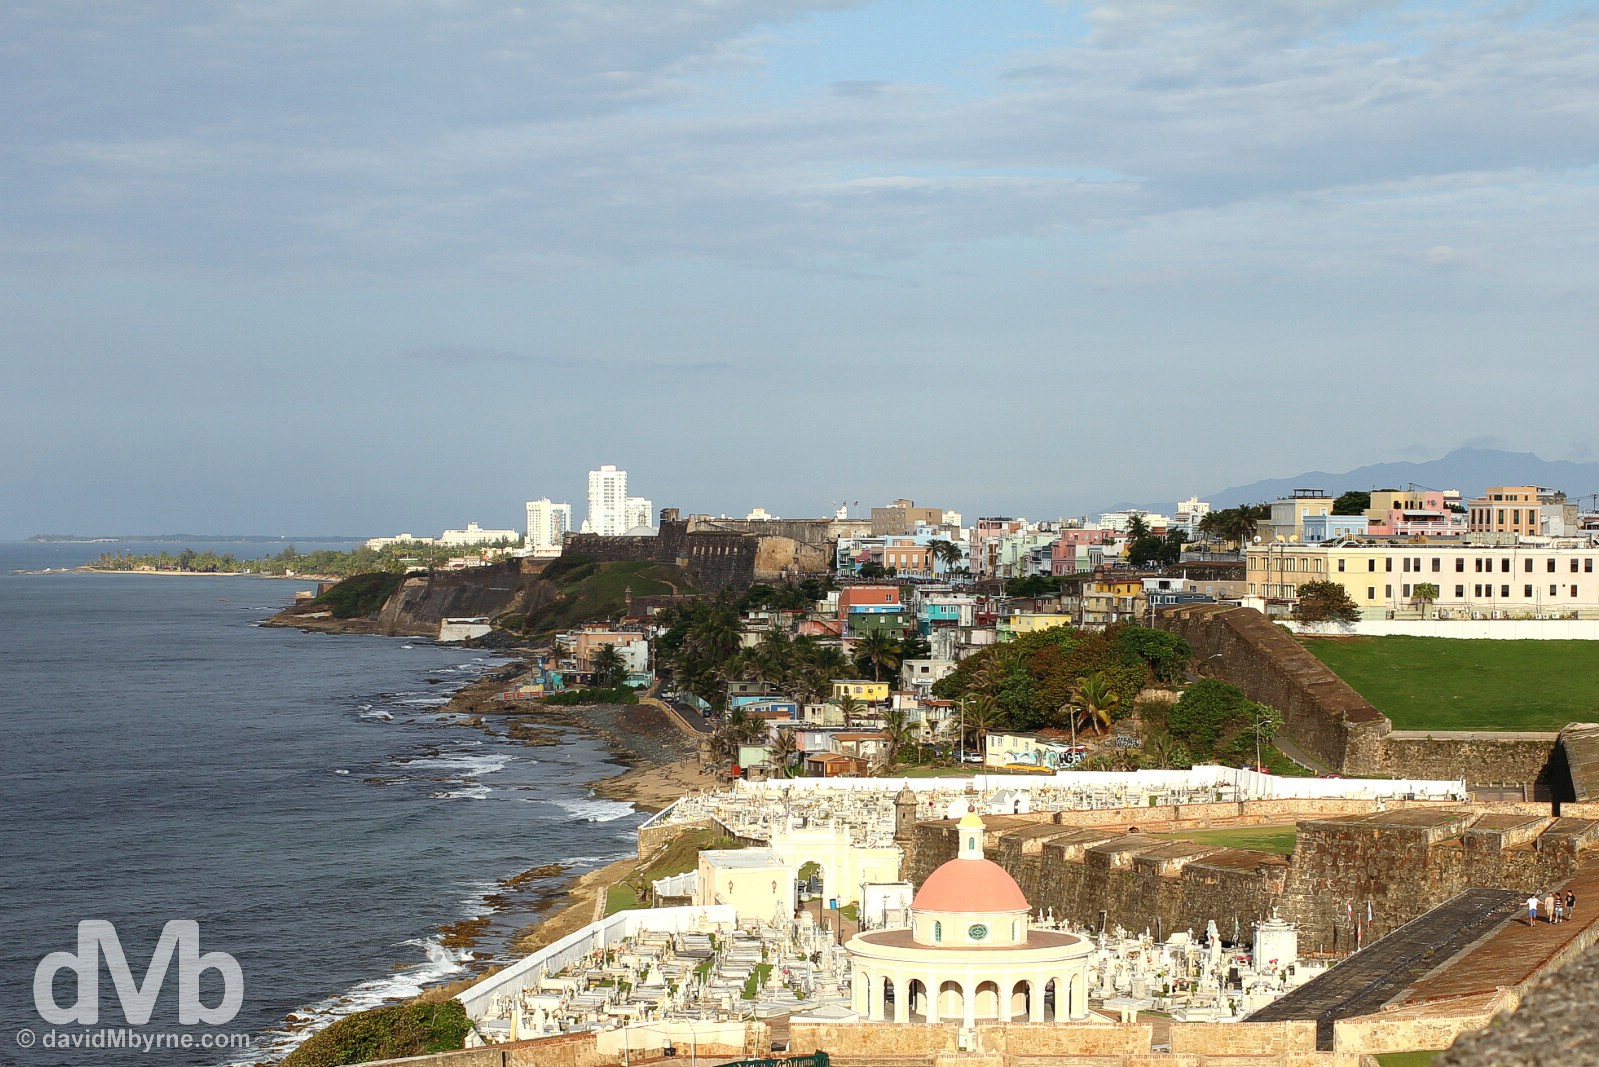 The northern, Atlantic-facing coast of the San Juan Islet as seen from the ramparts of Castillo San Felipe del Morro in Viejo (Old) San Juan, Puerto Rico, Greater Antilles. June 2, 2015.